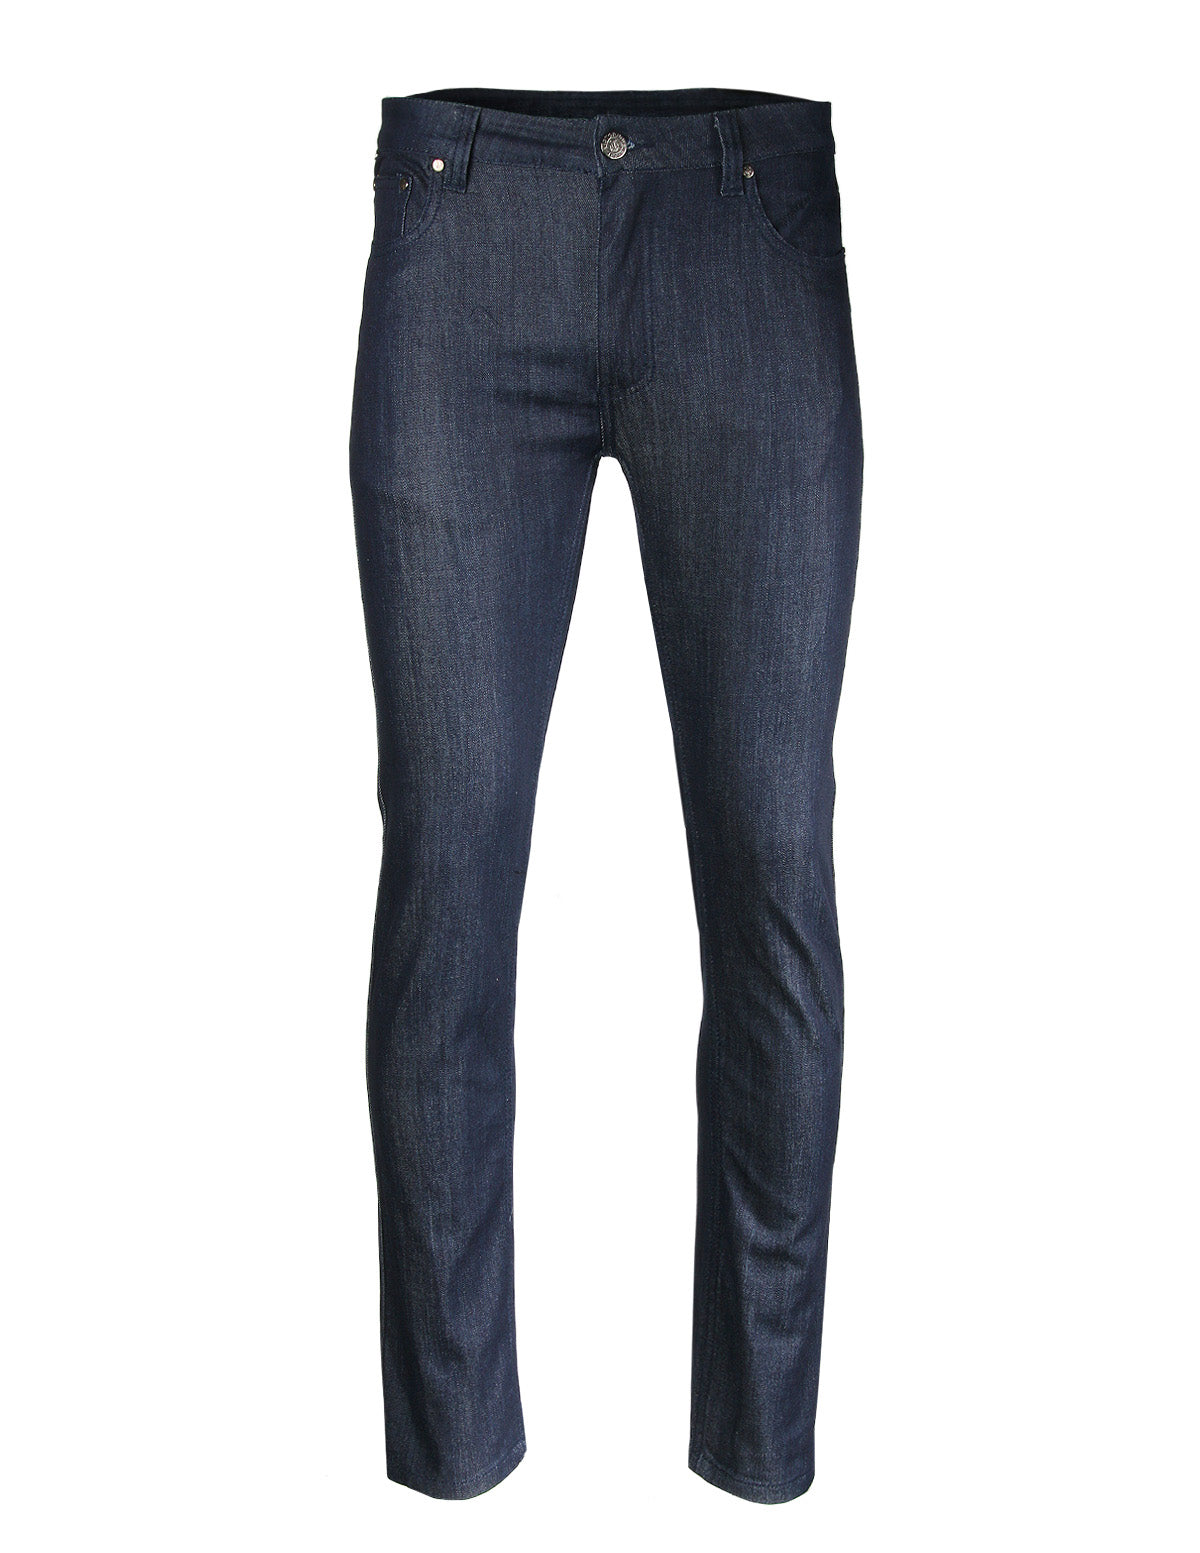 Sweet Look Classic Rhinestone Premium Women's Stretch Skinny Fit BLUE Denim  Jeans Pants - Walmart.com